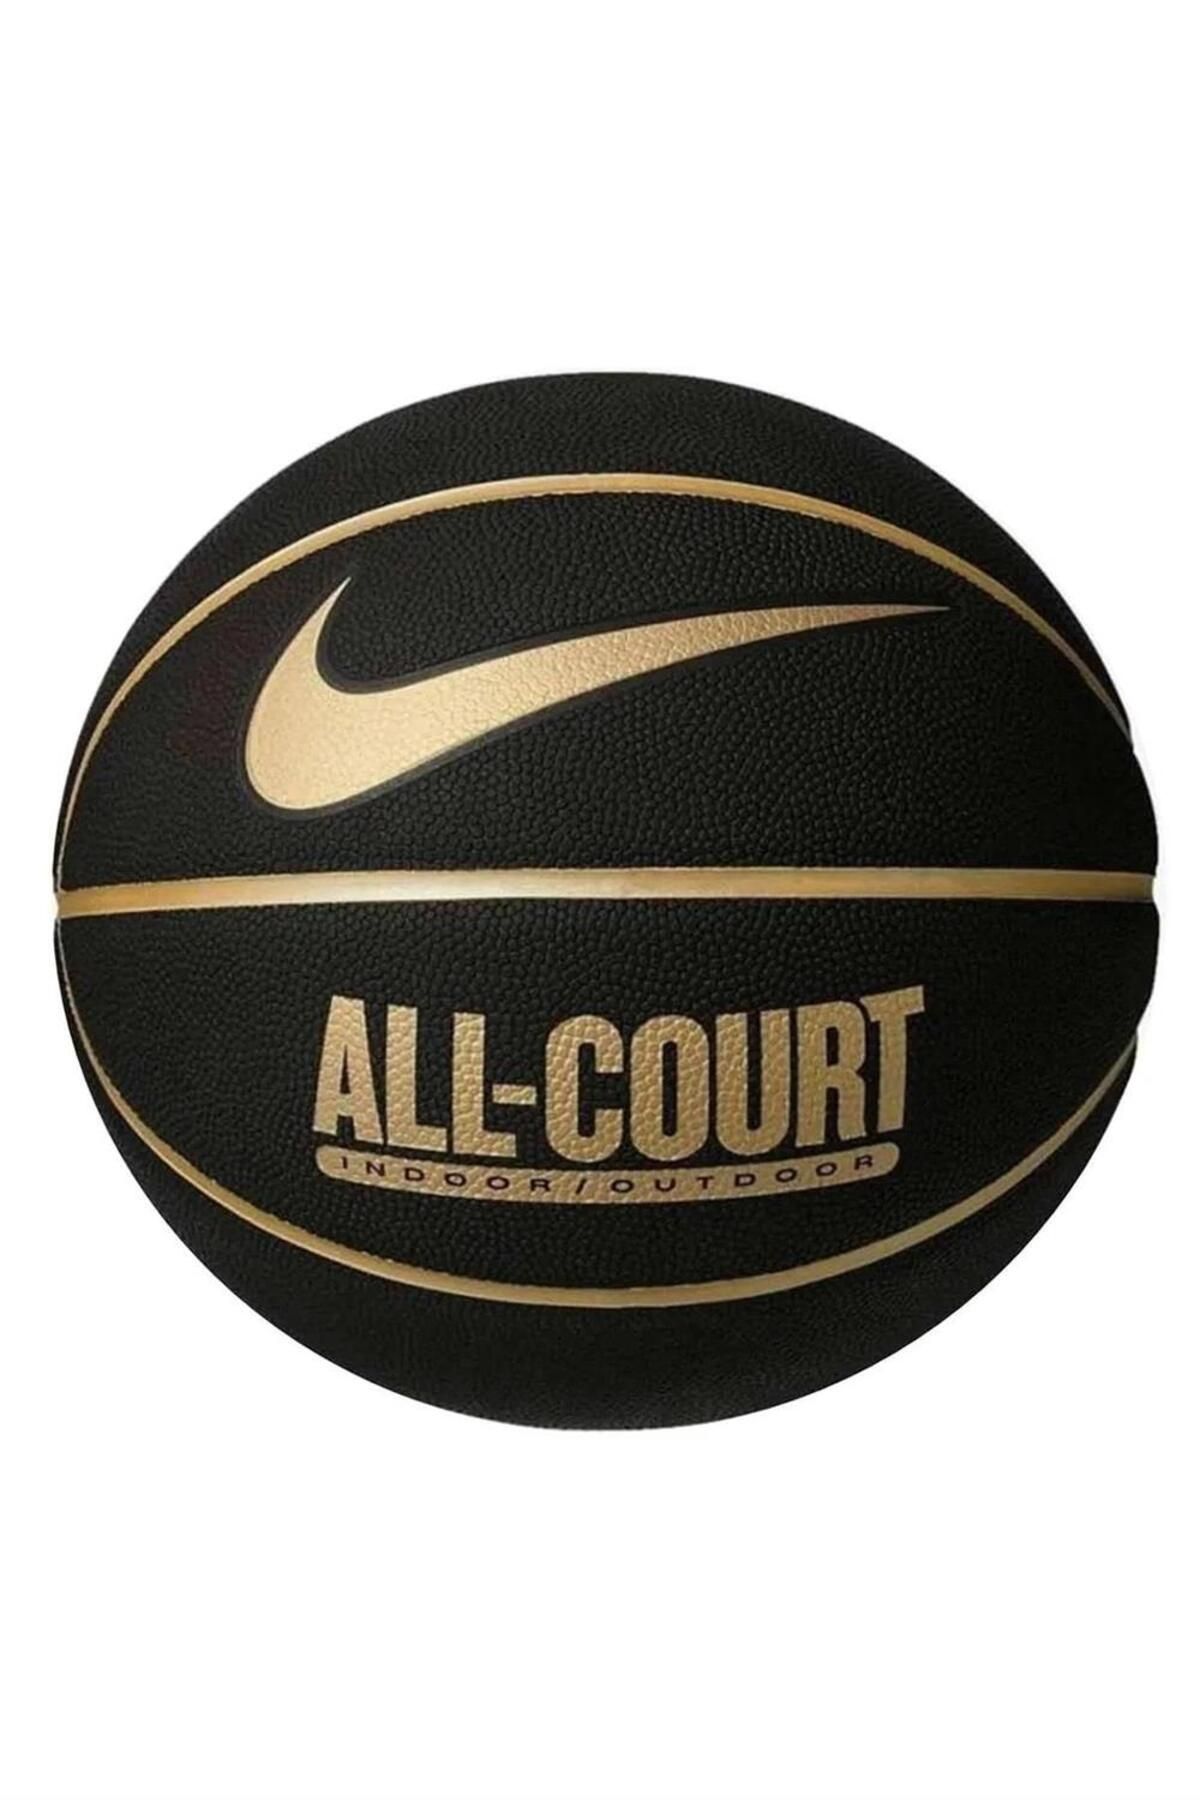 Nike Everyday All Court 8p Unisex Basketbol Topu N.100.4369.070.07